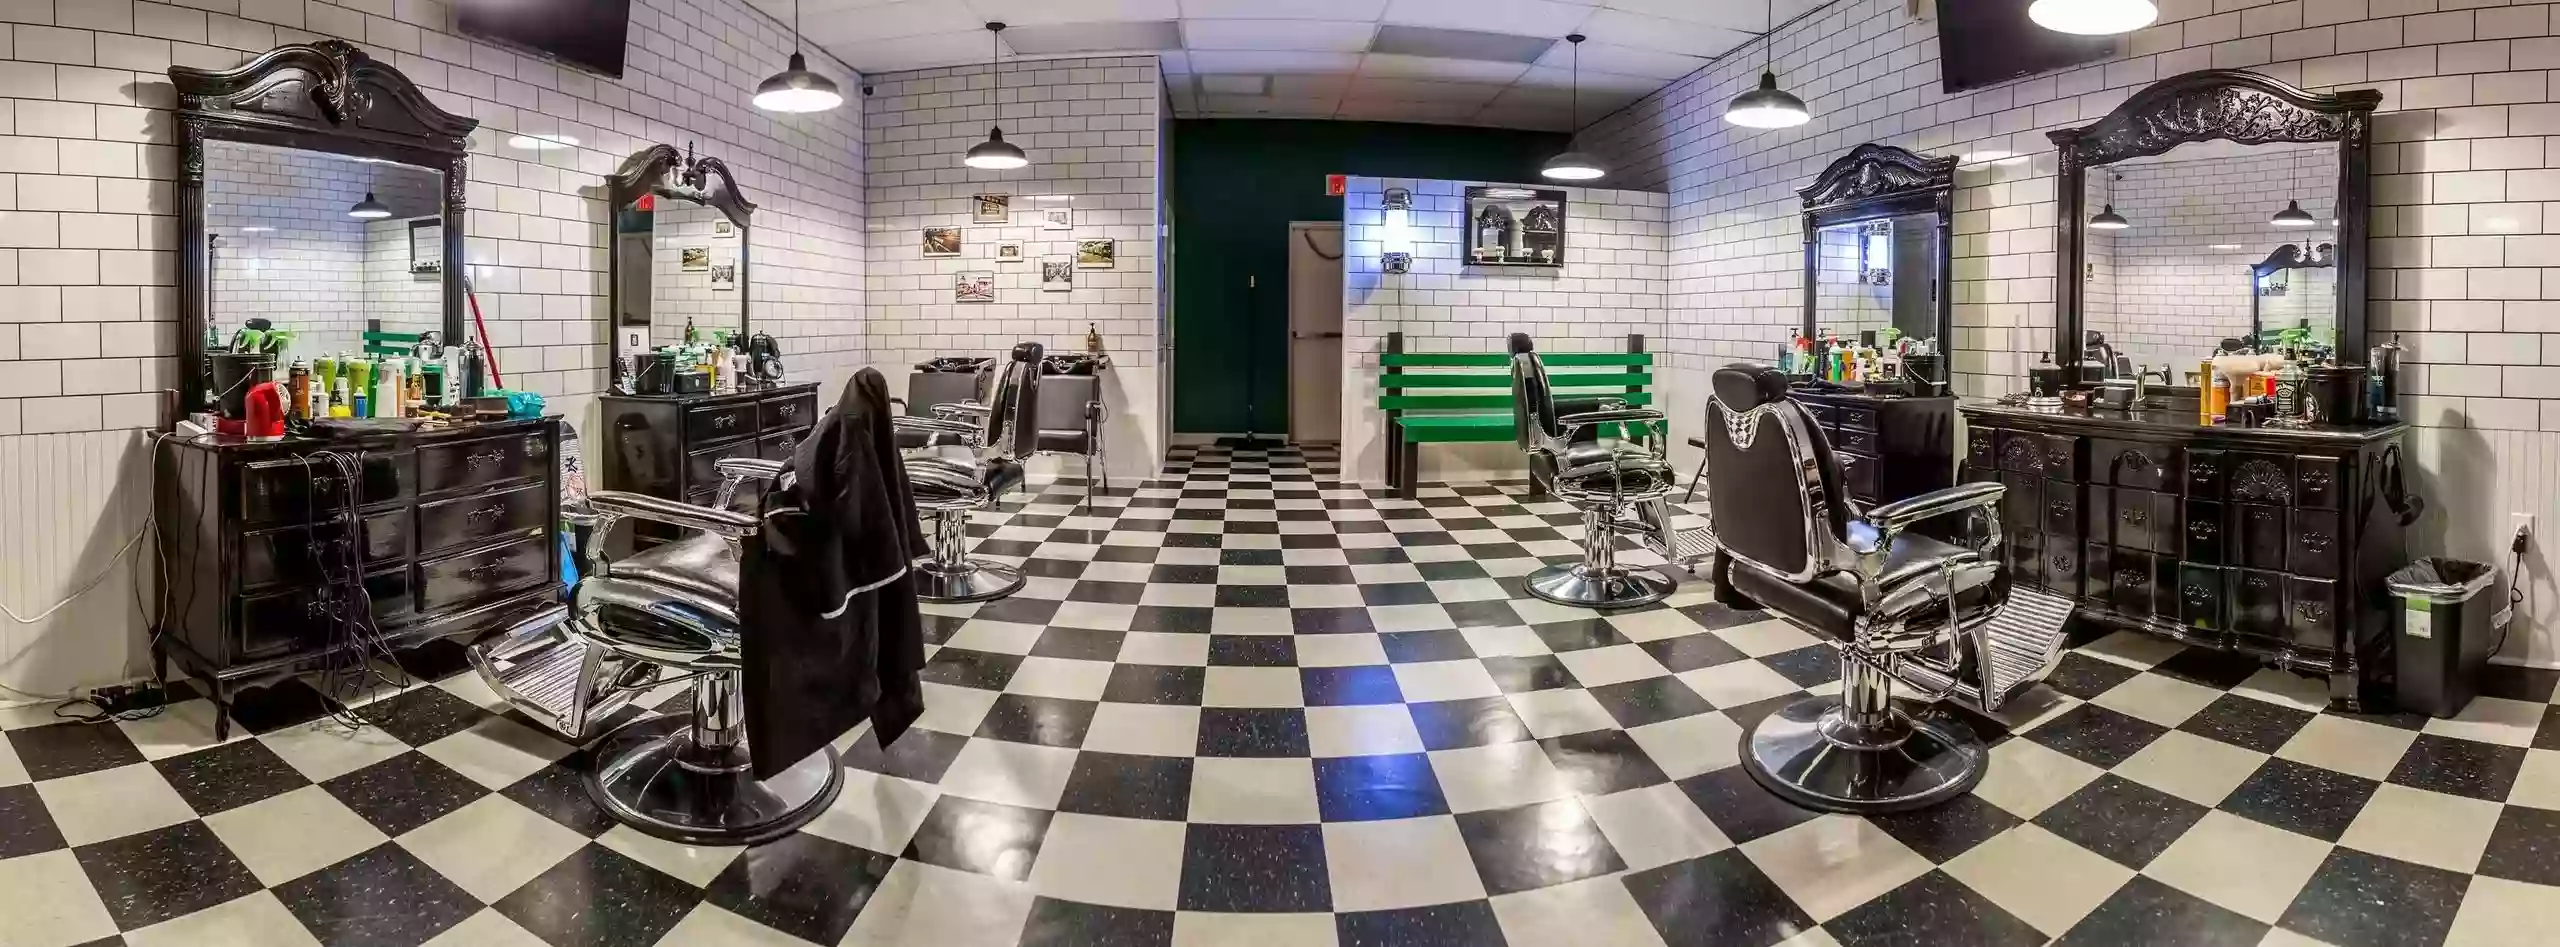 Sapia's Barber Shop